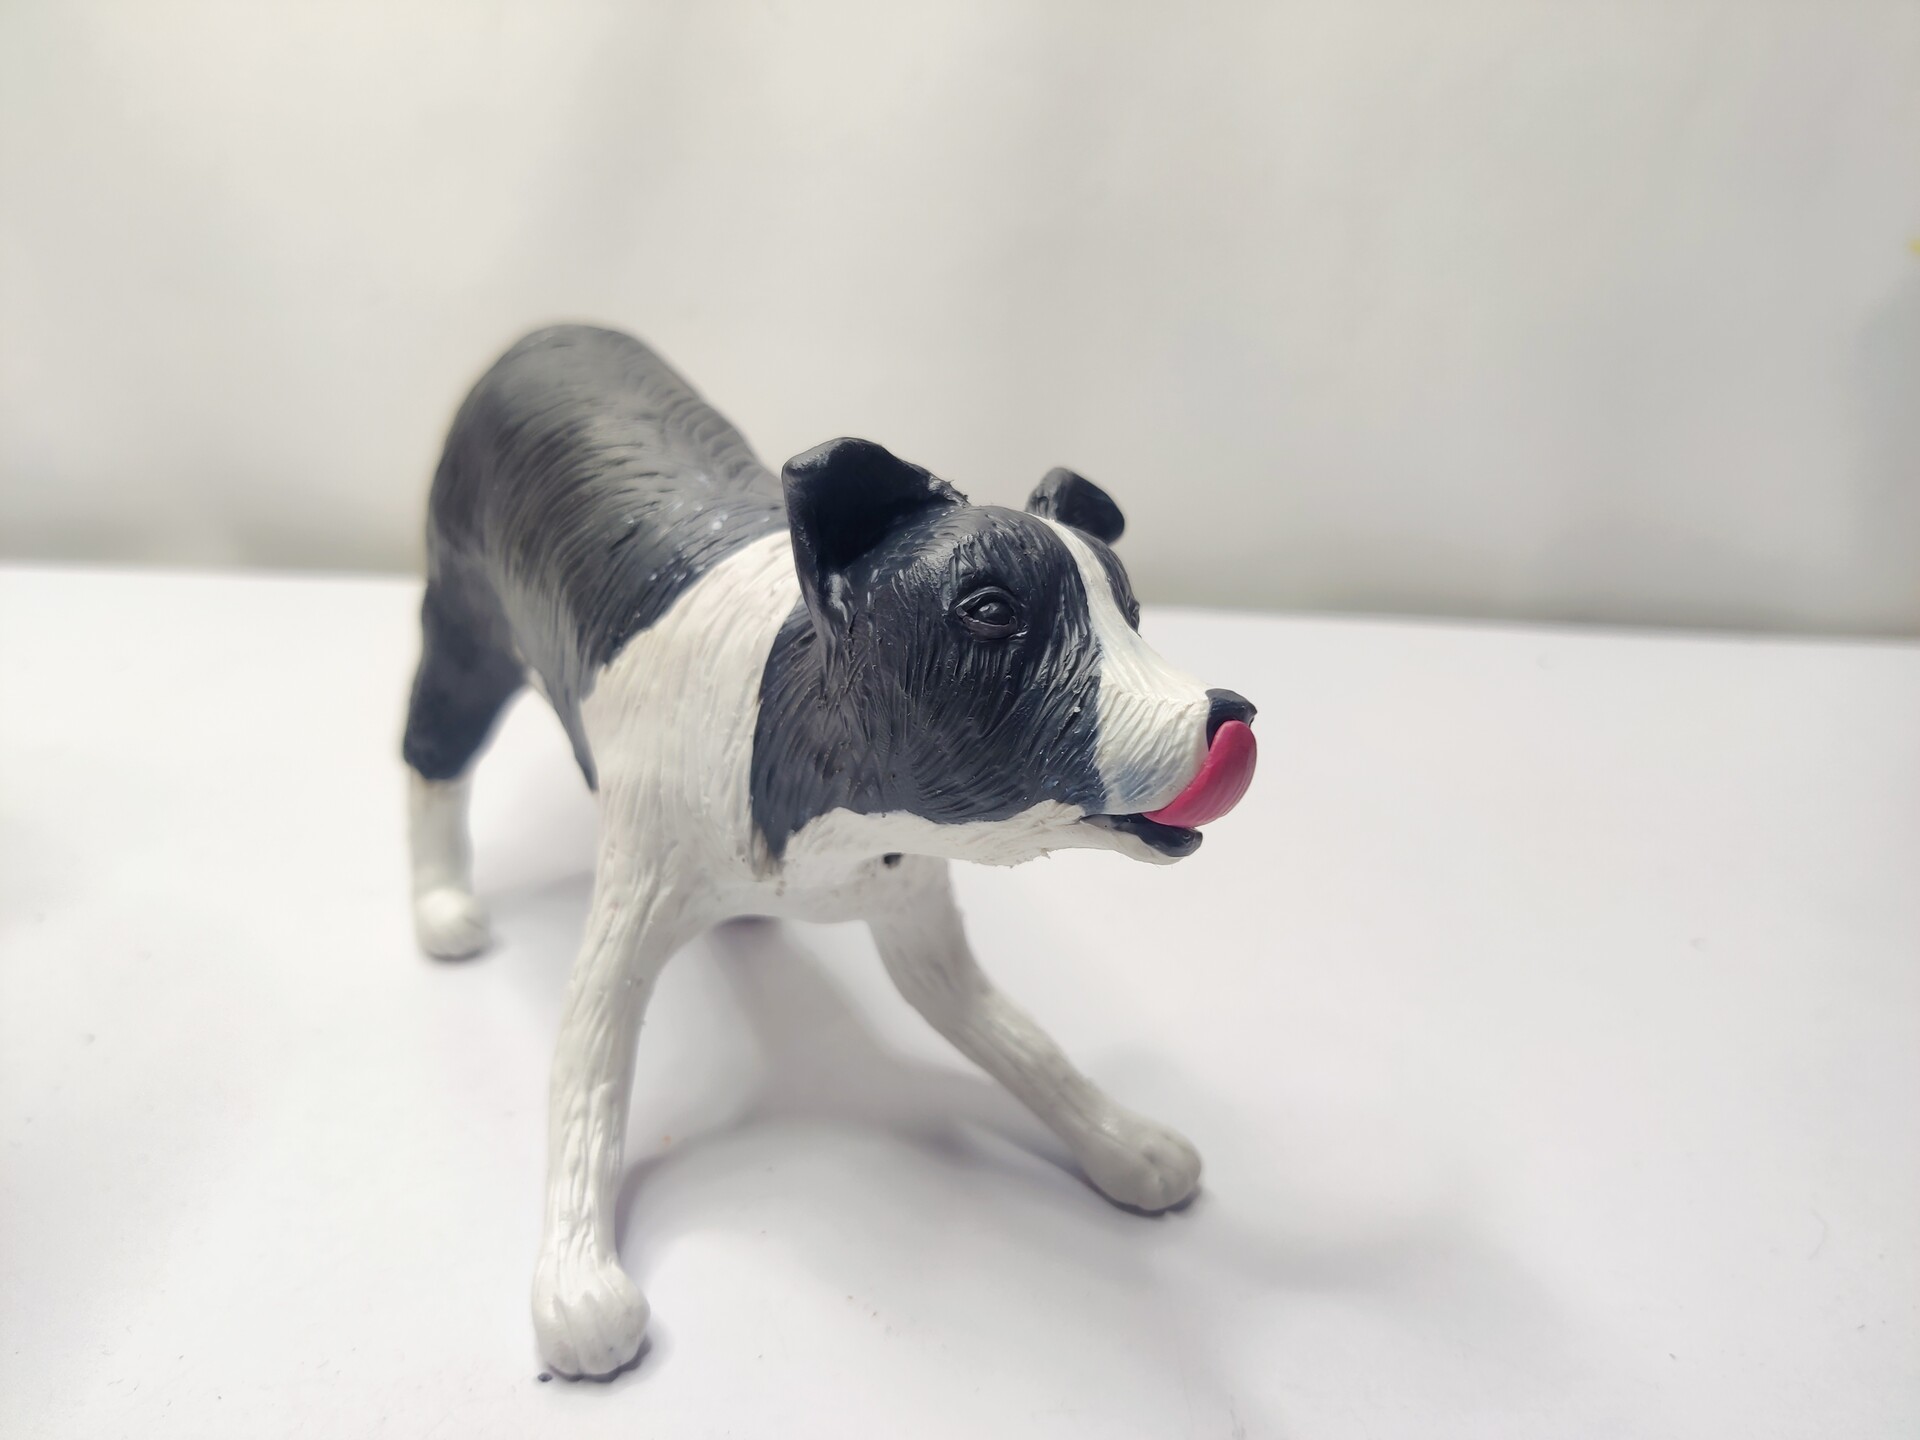 Sculpting a Polymer Clay Dog